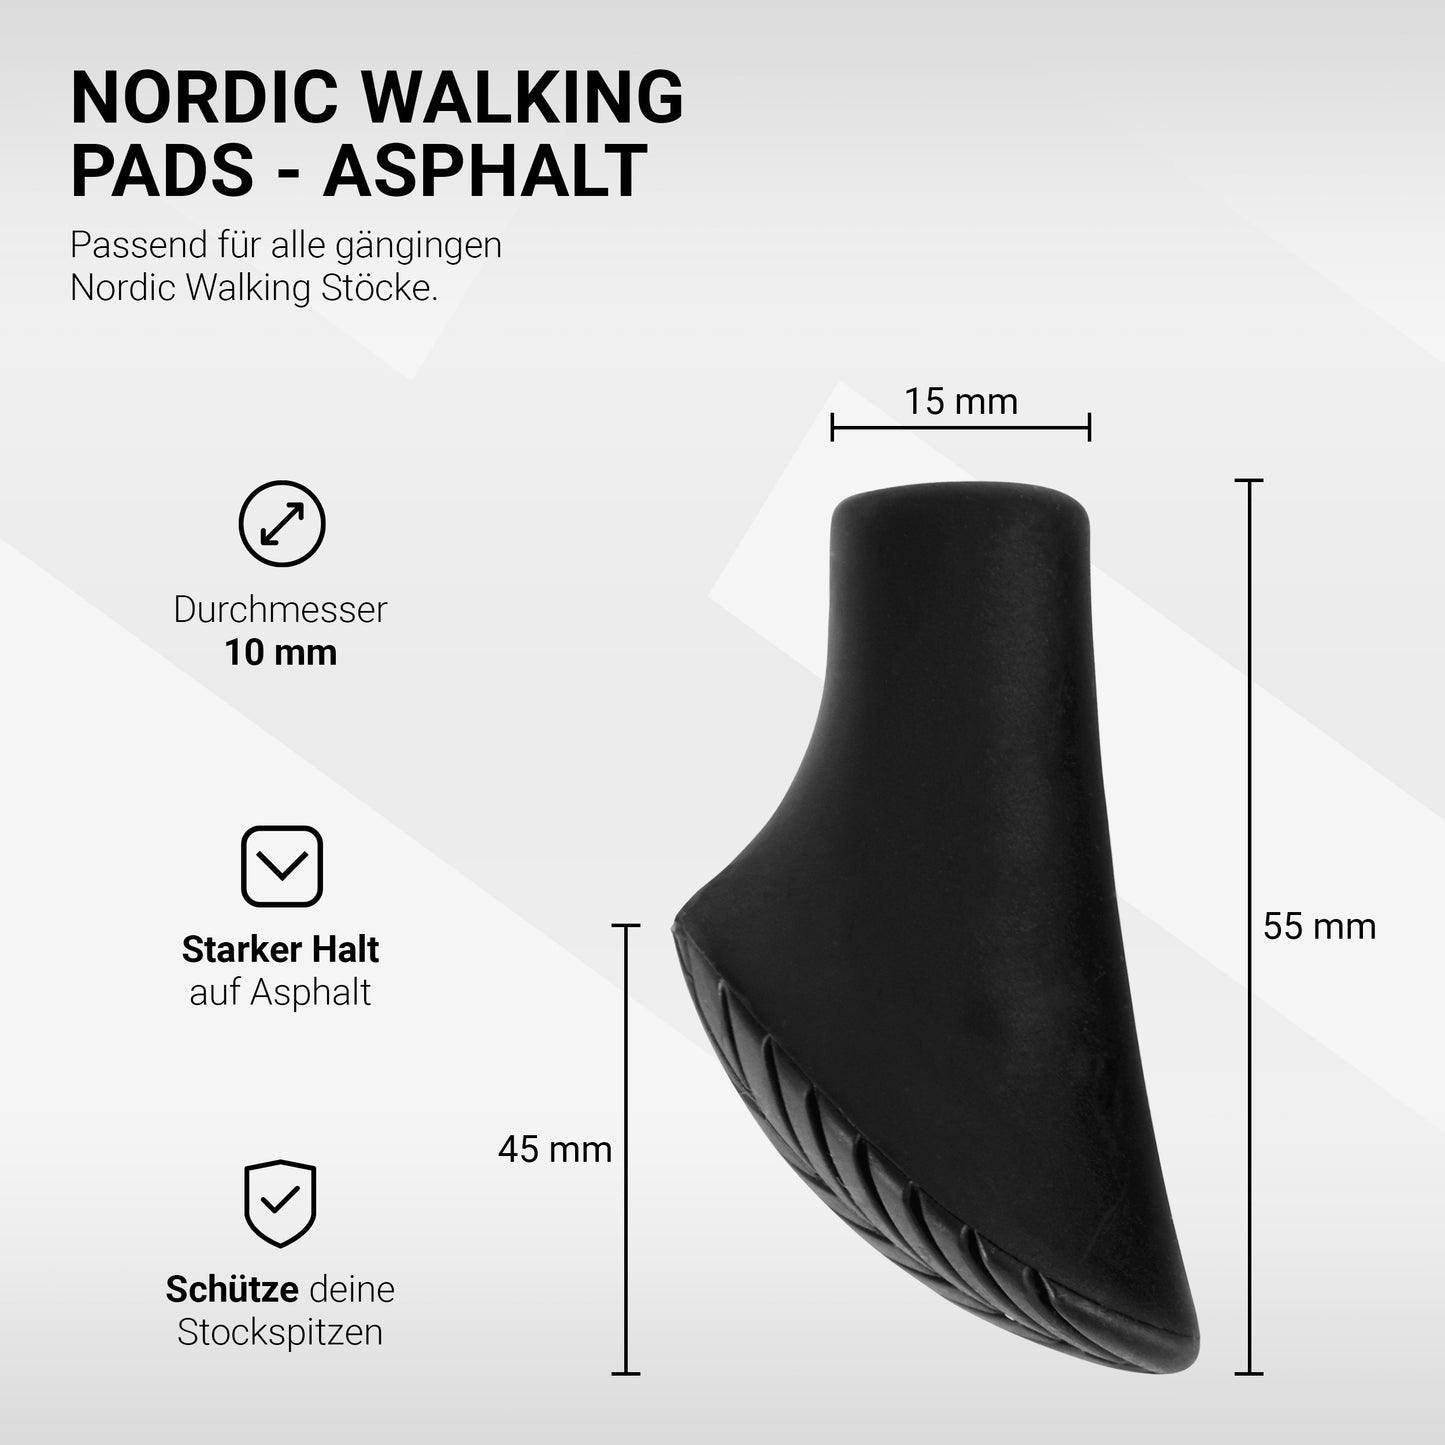 Nordic Walking Pads Asphalt